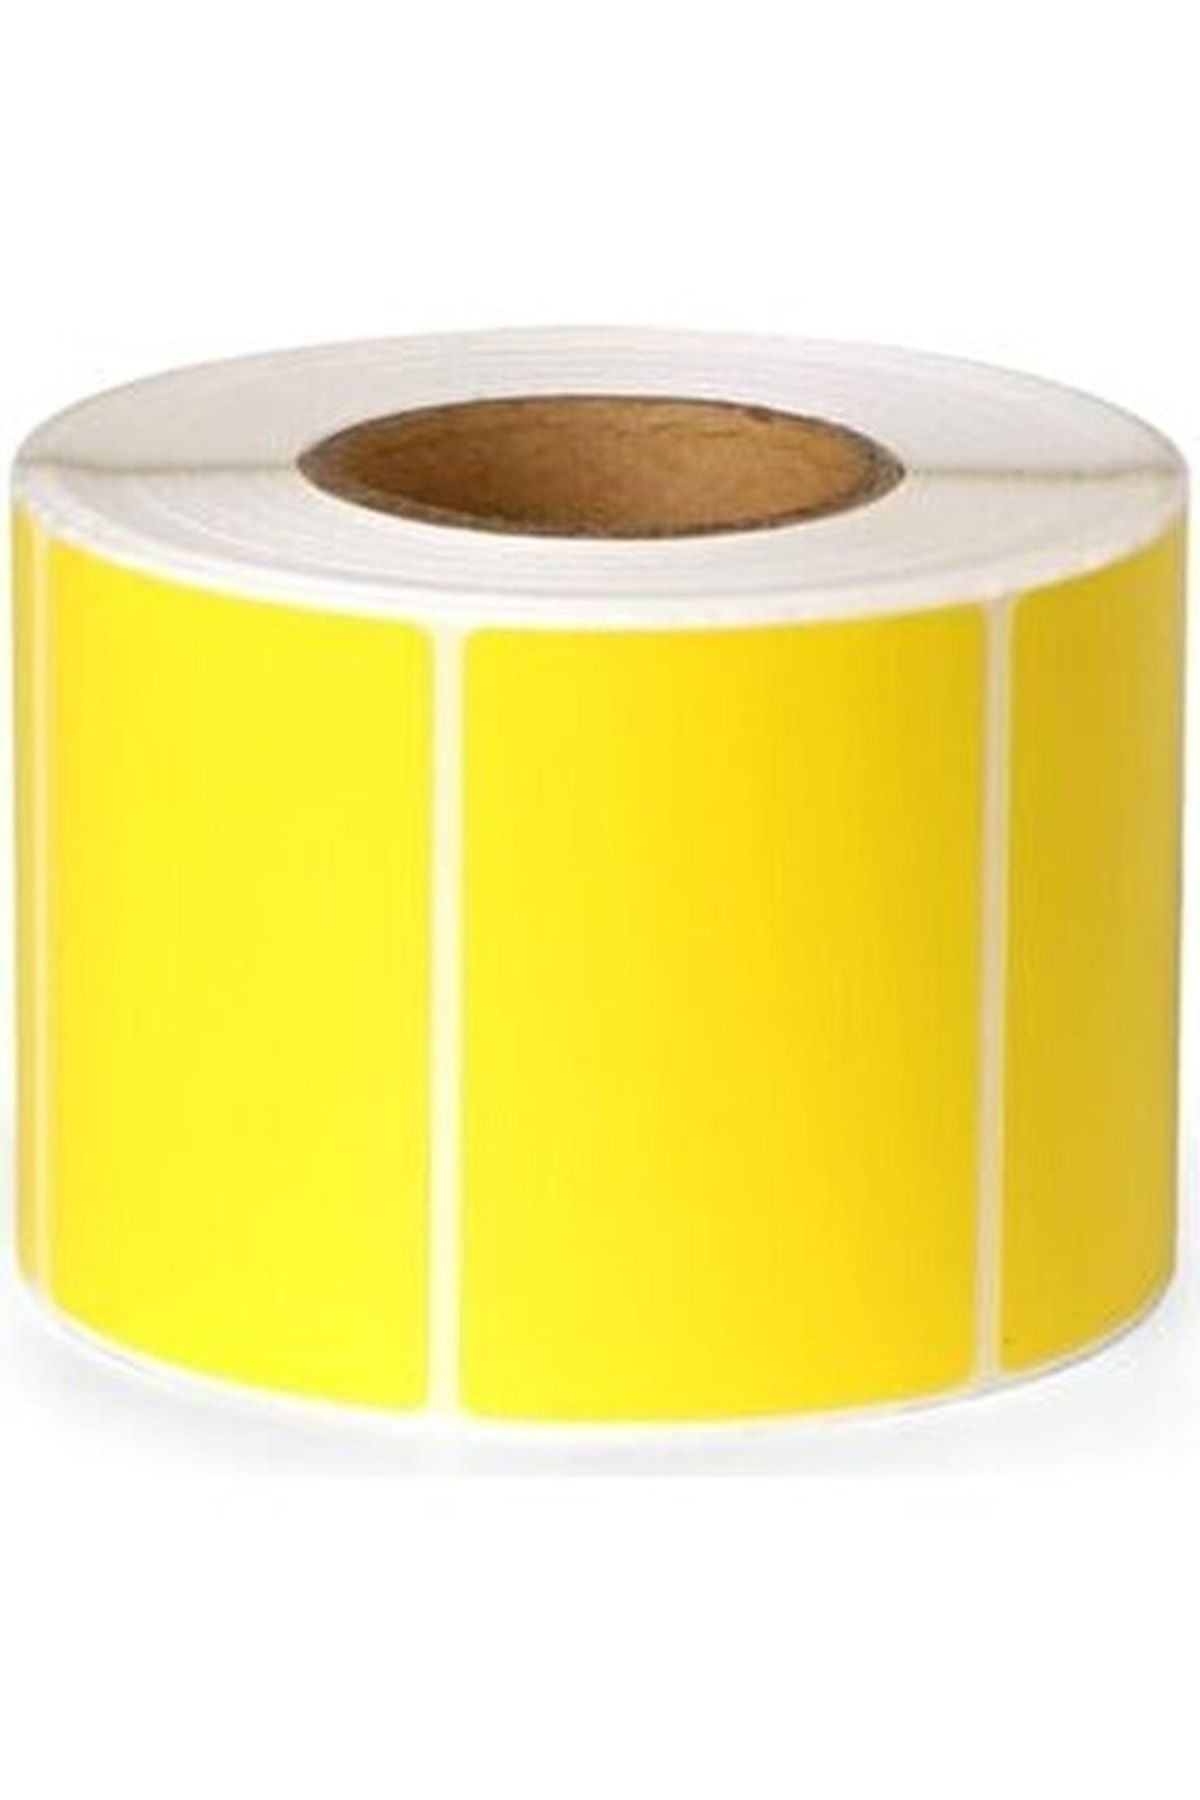 KARTALLAR ETİKET 40x60 Eczane Ilaç Etiketi Sarı Renk 1 Rulo 1000 Adet- 10 Rulo